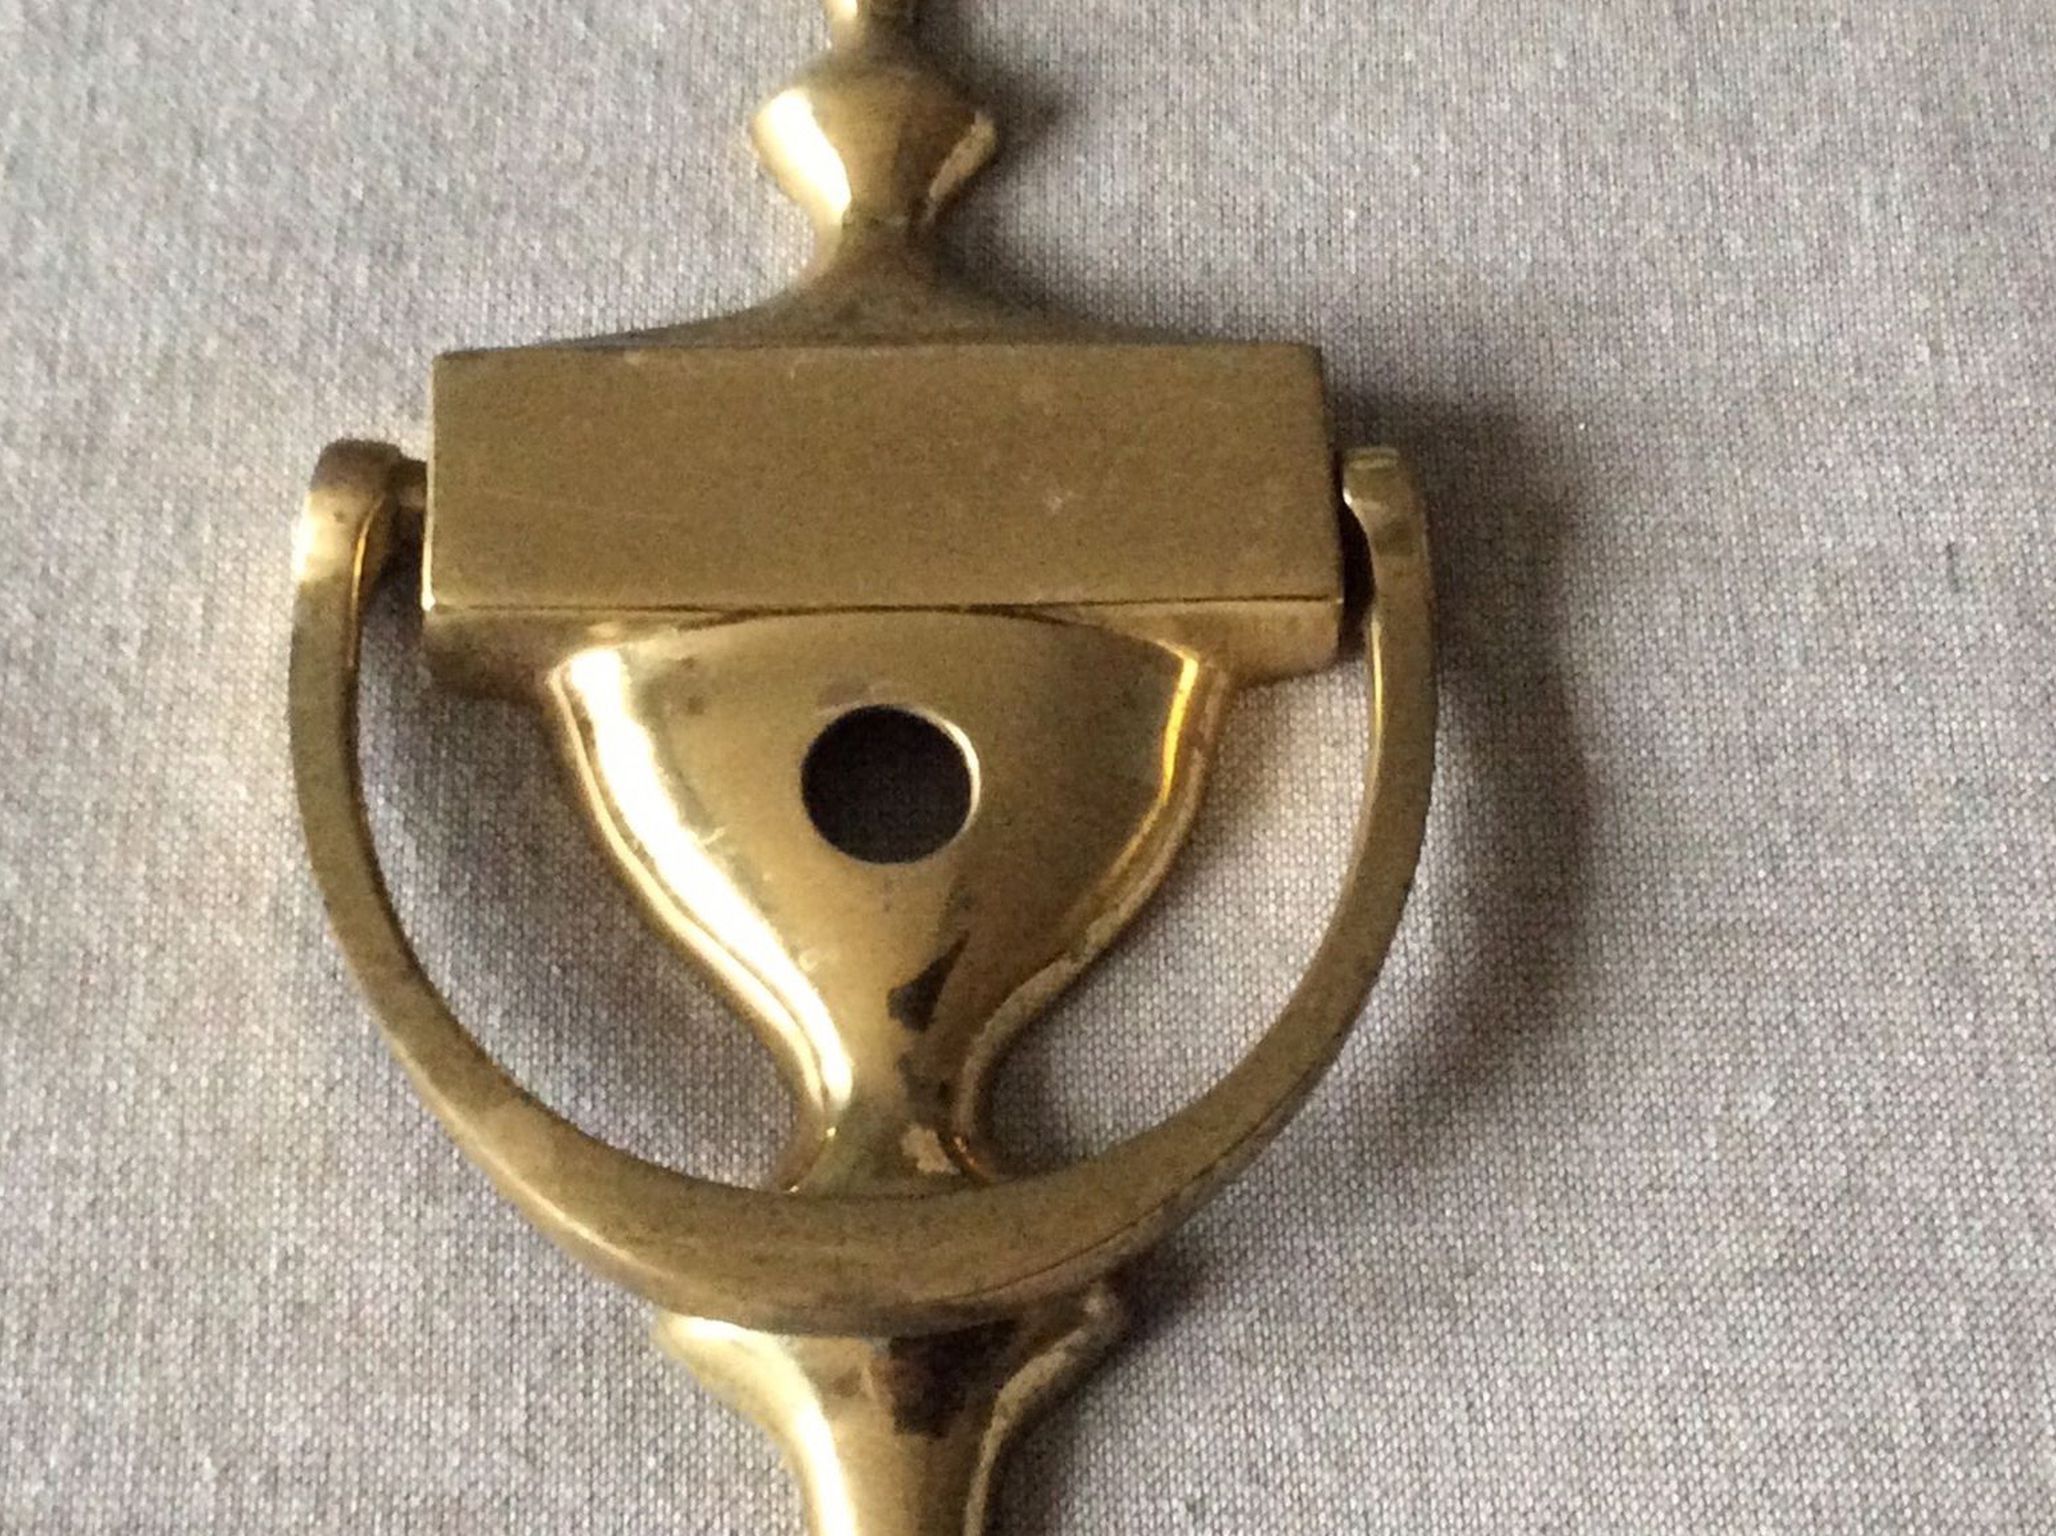 Brass Door Knocker With Peephole